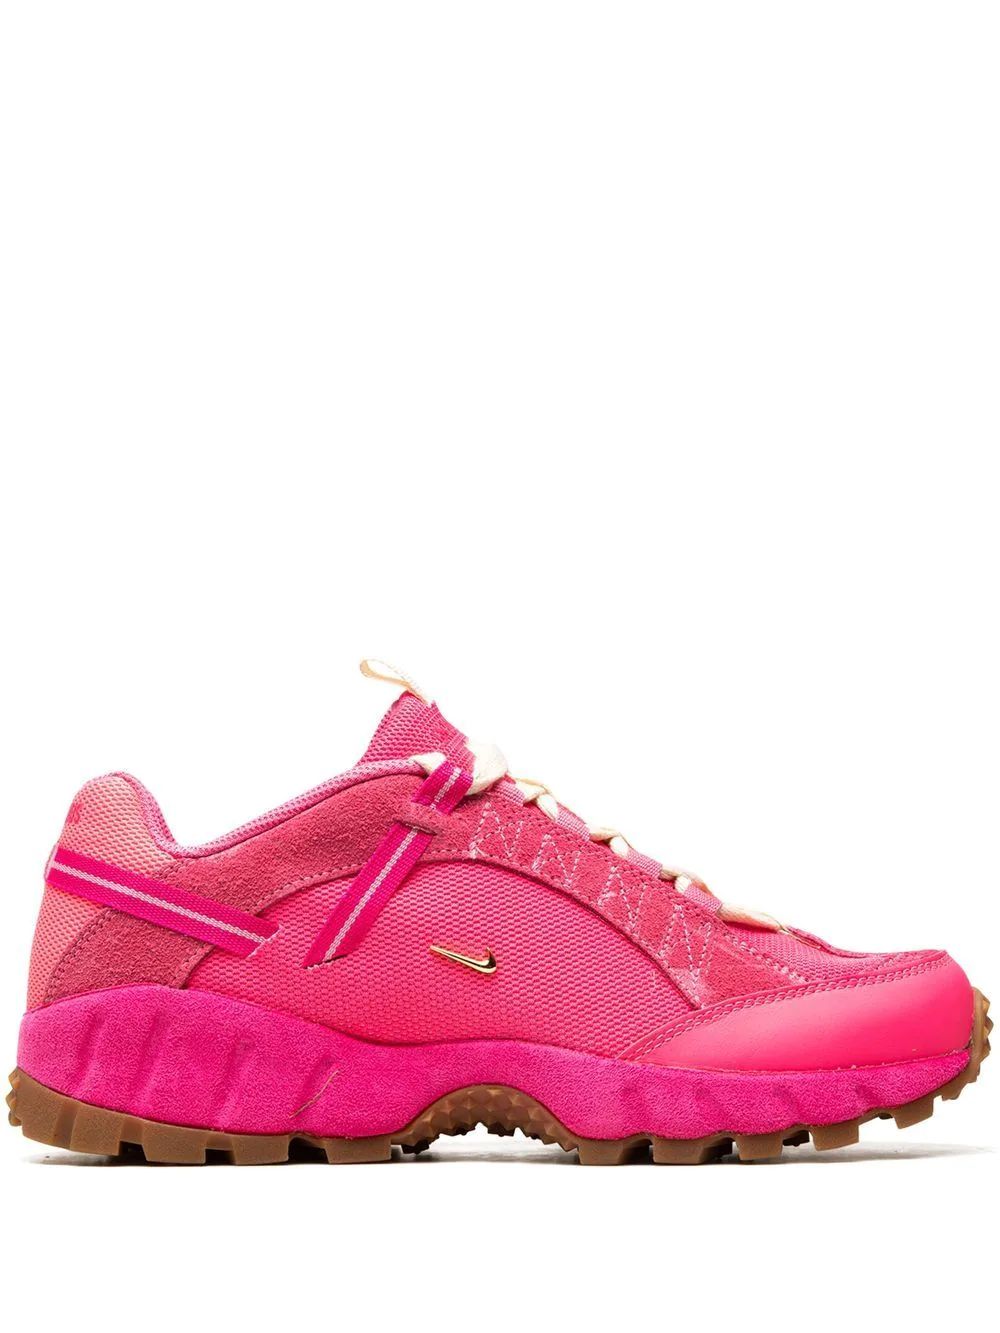 x Jacquemus Air Humara LX "Pink" sneakers | Farfetch Global